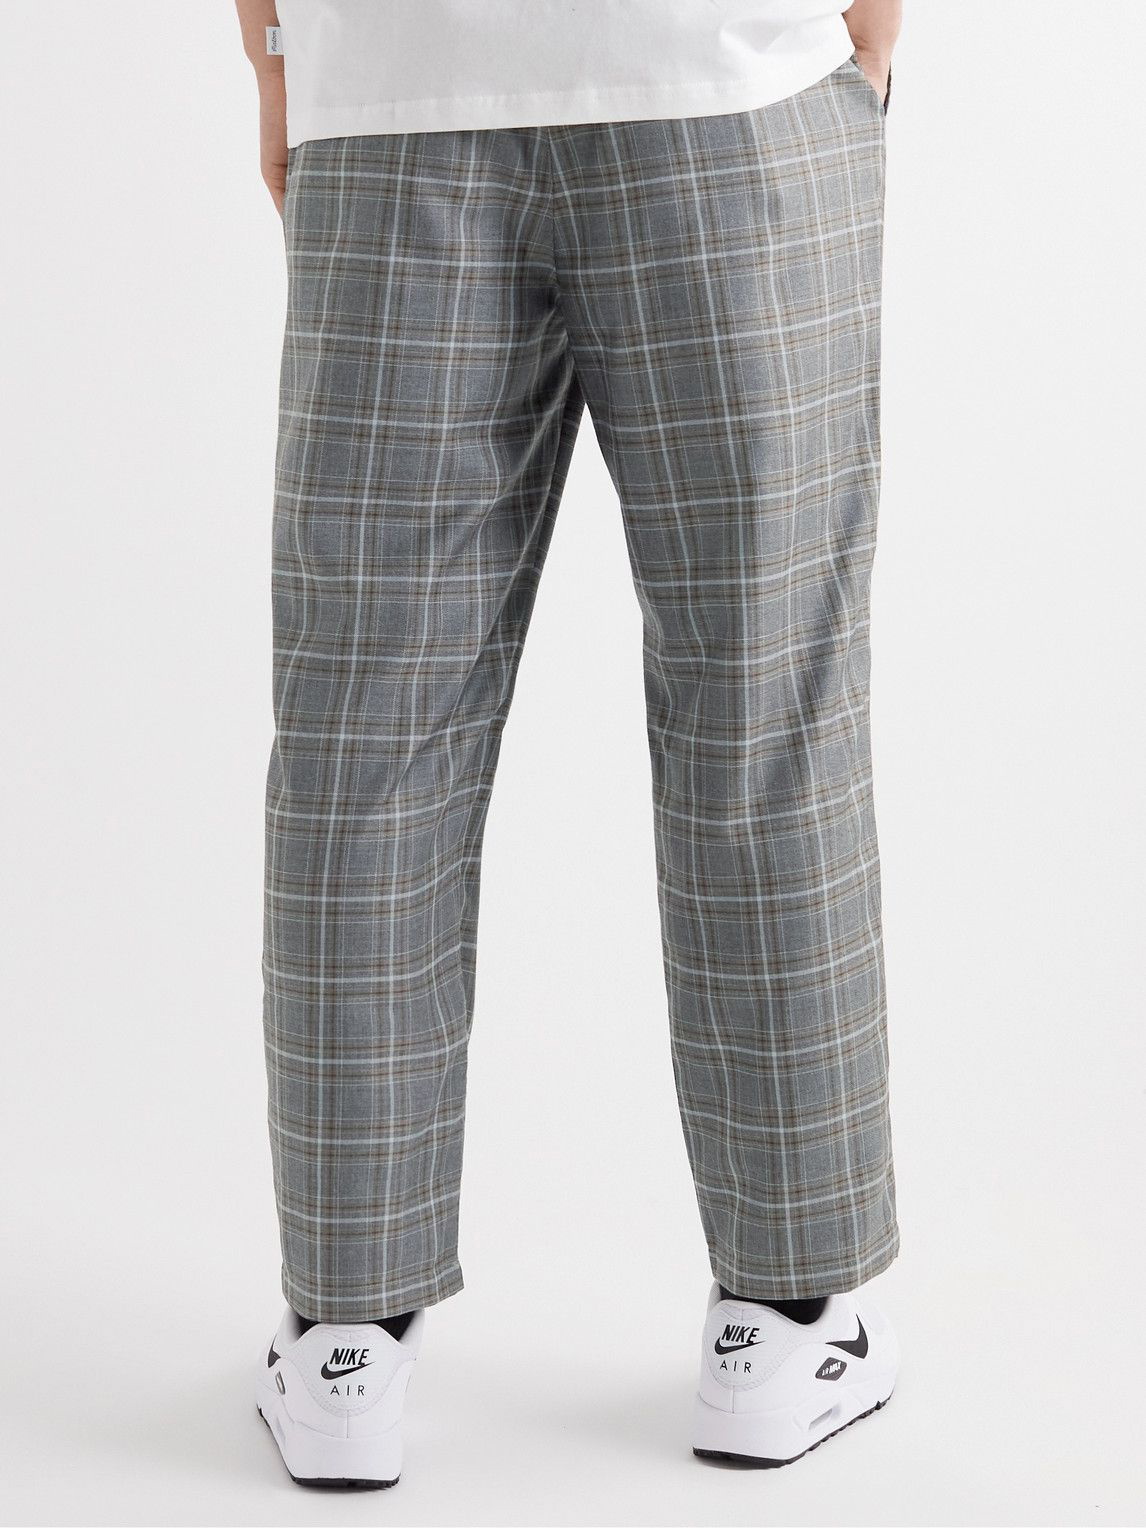 Noak slim fit cropped pants in gray grid check | ASOS